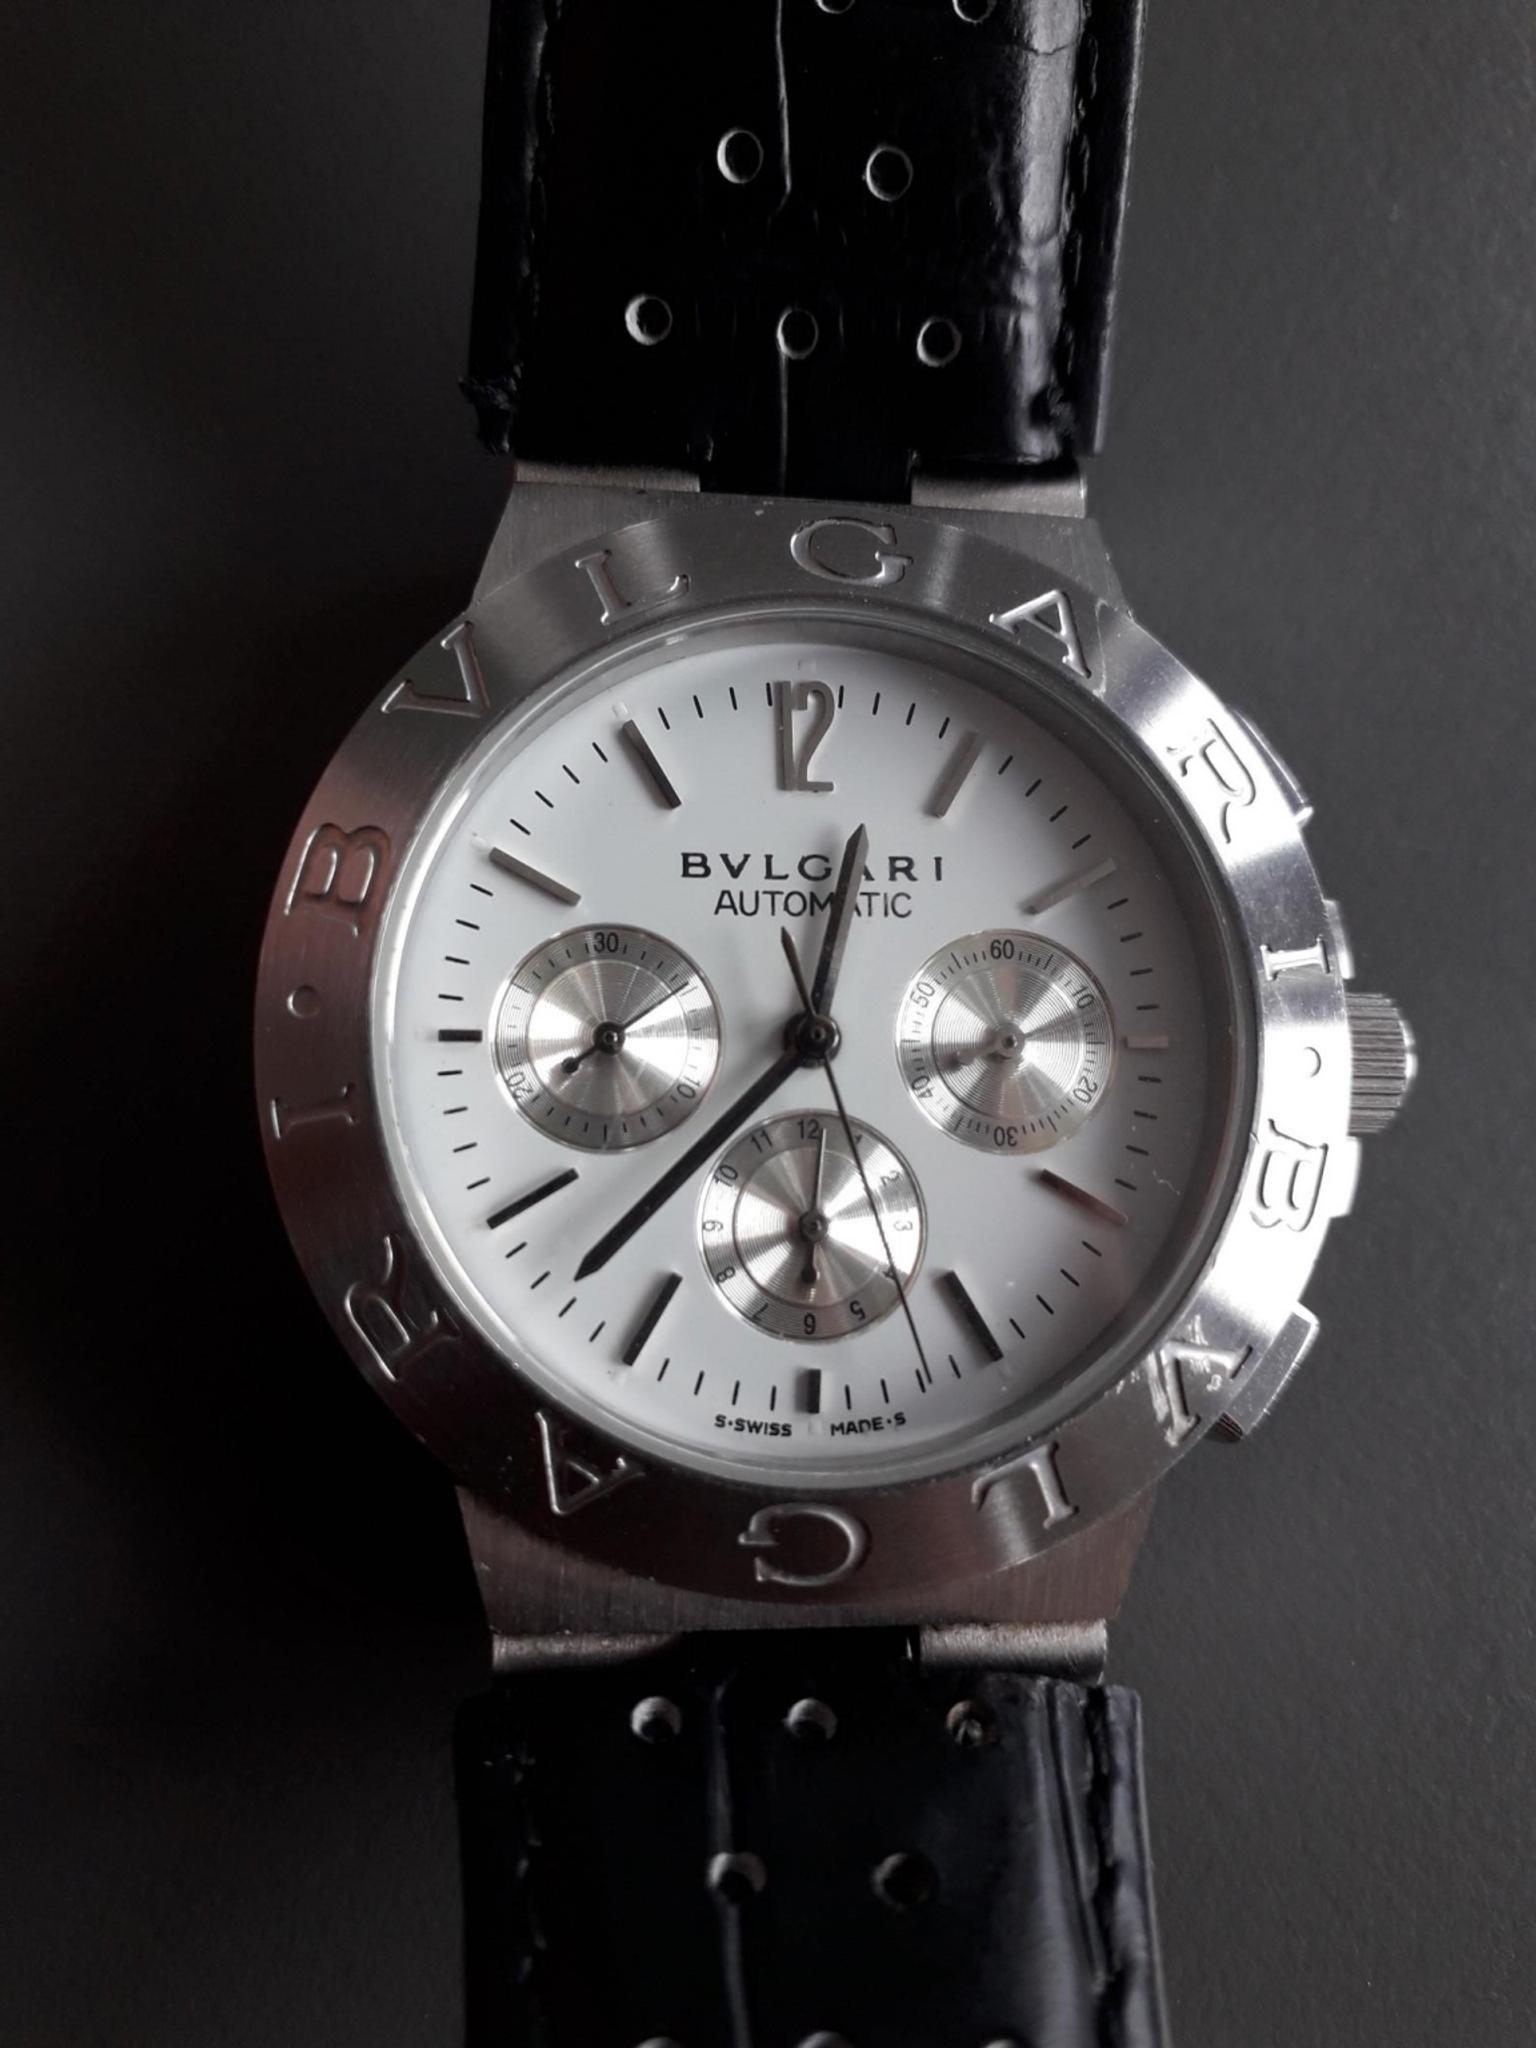 Bvlgari Uhr SD 38 S l2161 in 6850 